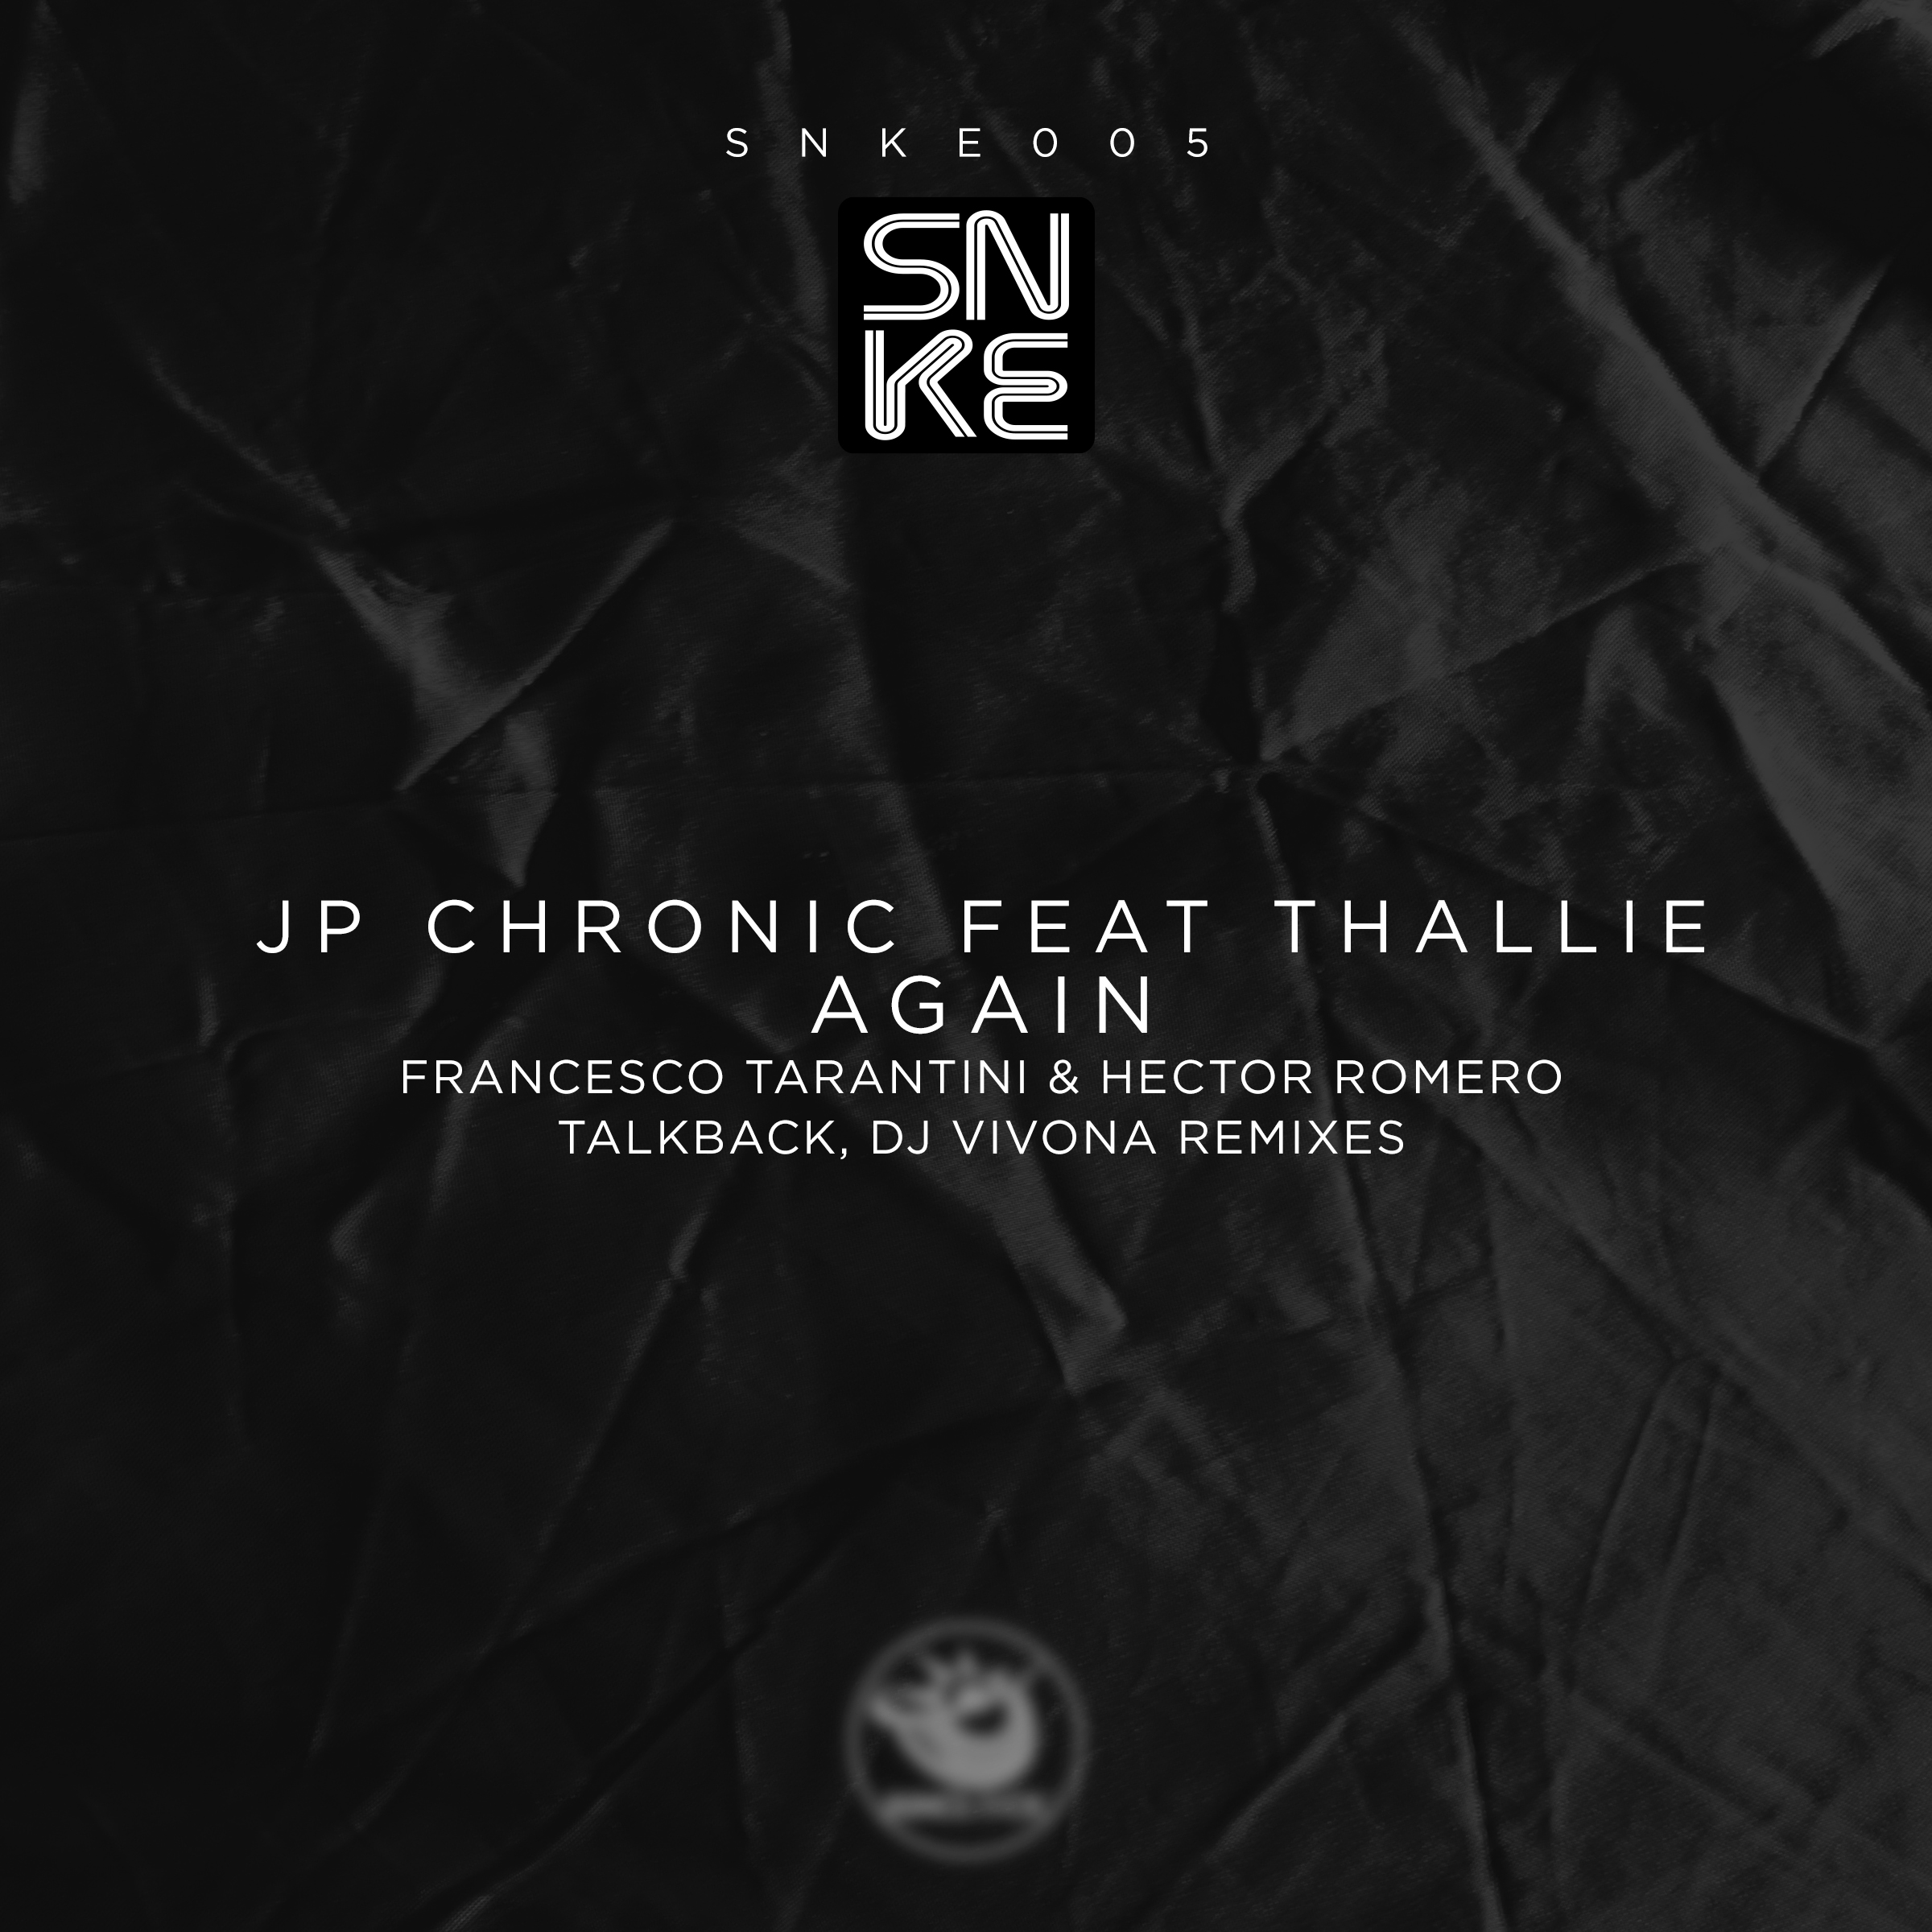 JP Chronic feat. Thallie - Again (incl. Tarantini & Romero, Talkback and Dj Vivona Rmxs) - SNKE005 Cover